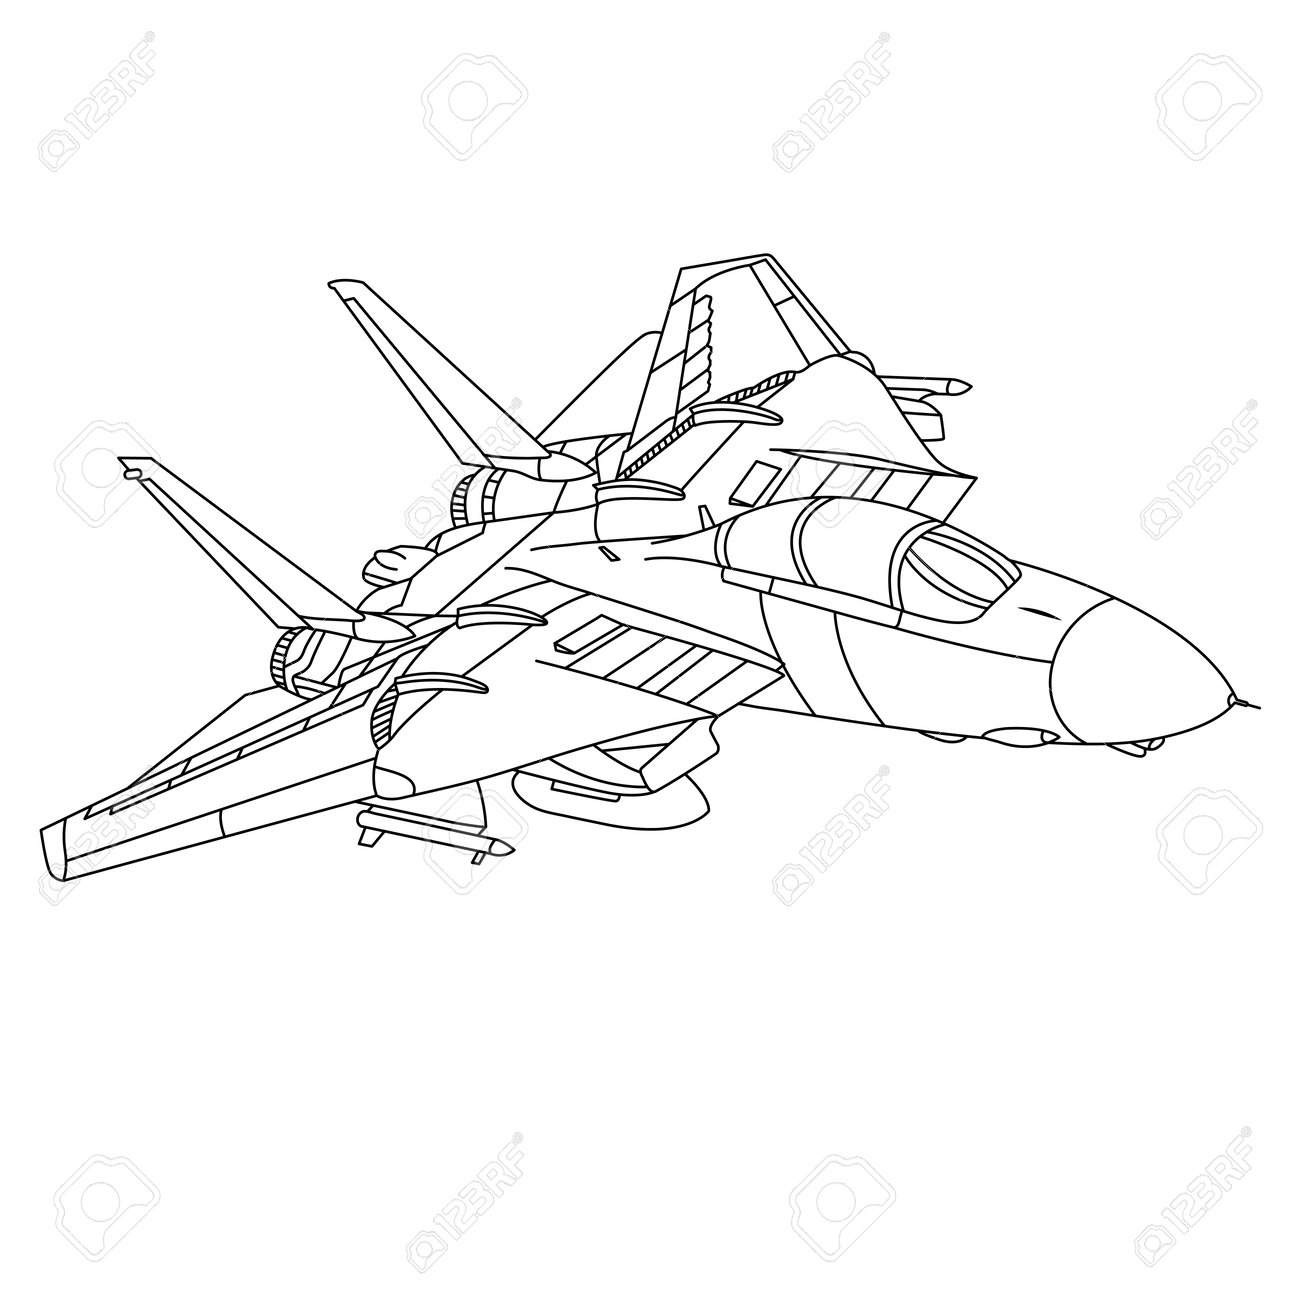 Military aircraft f